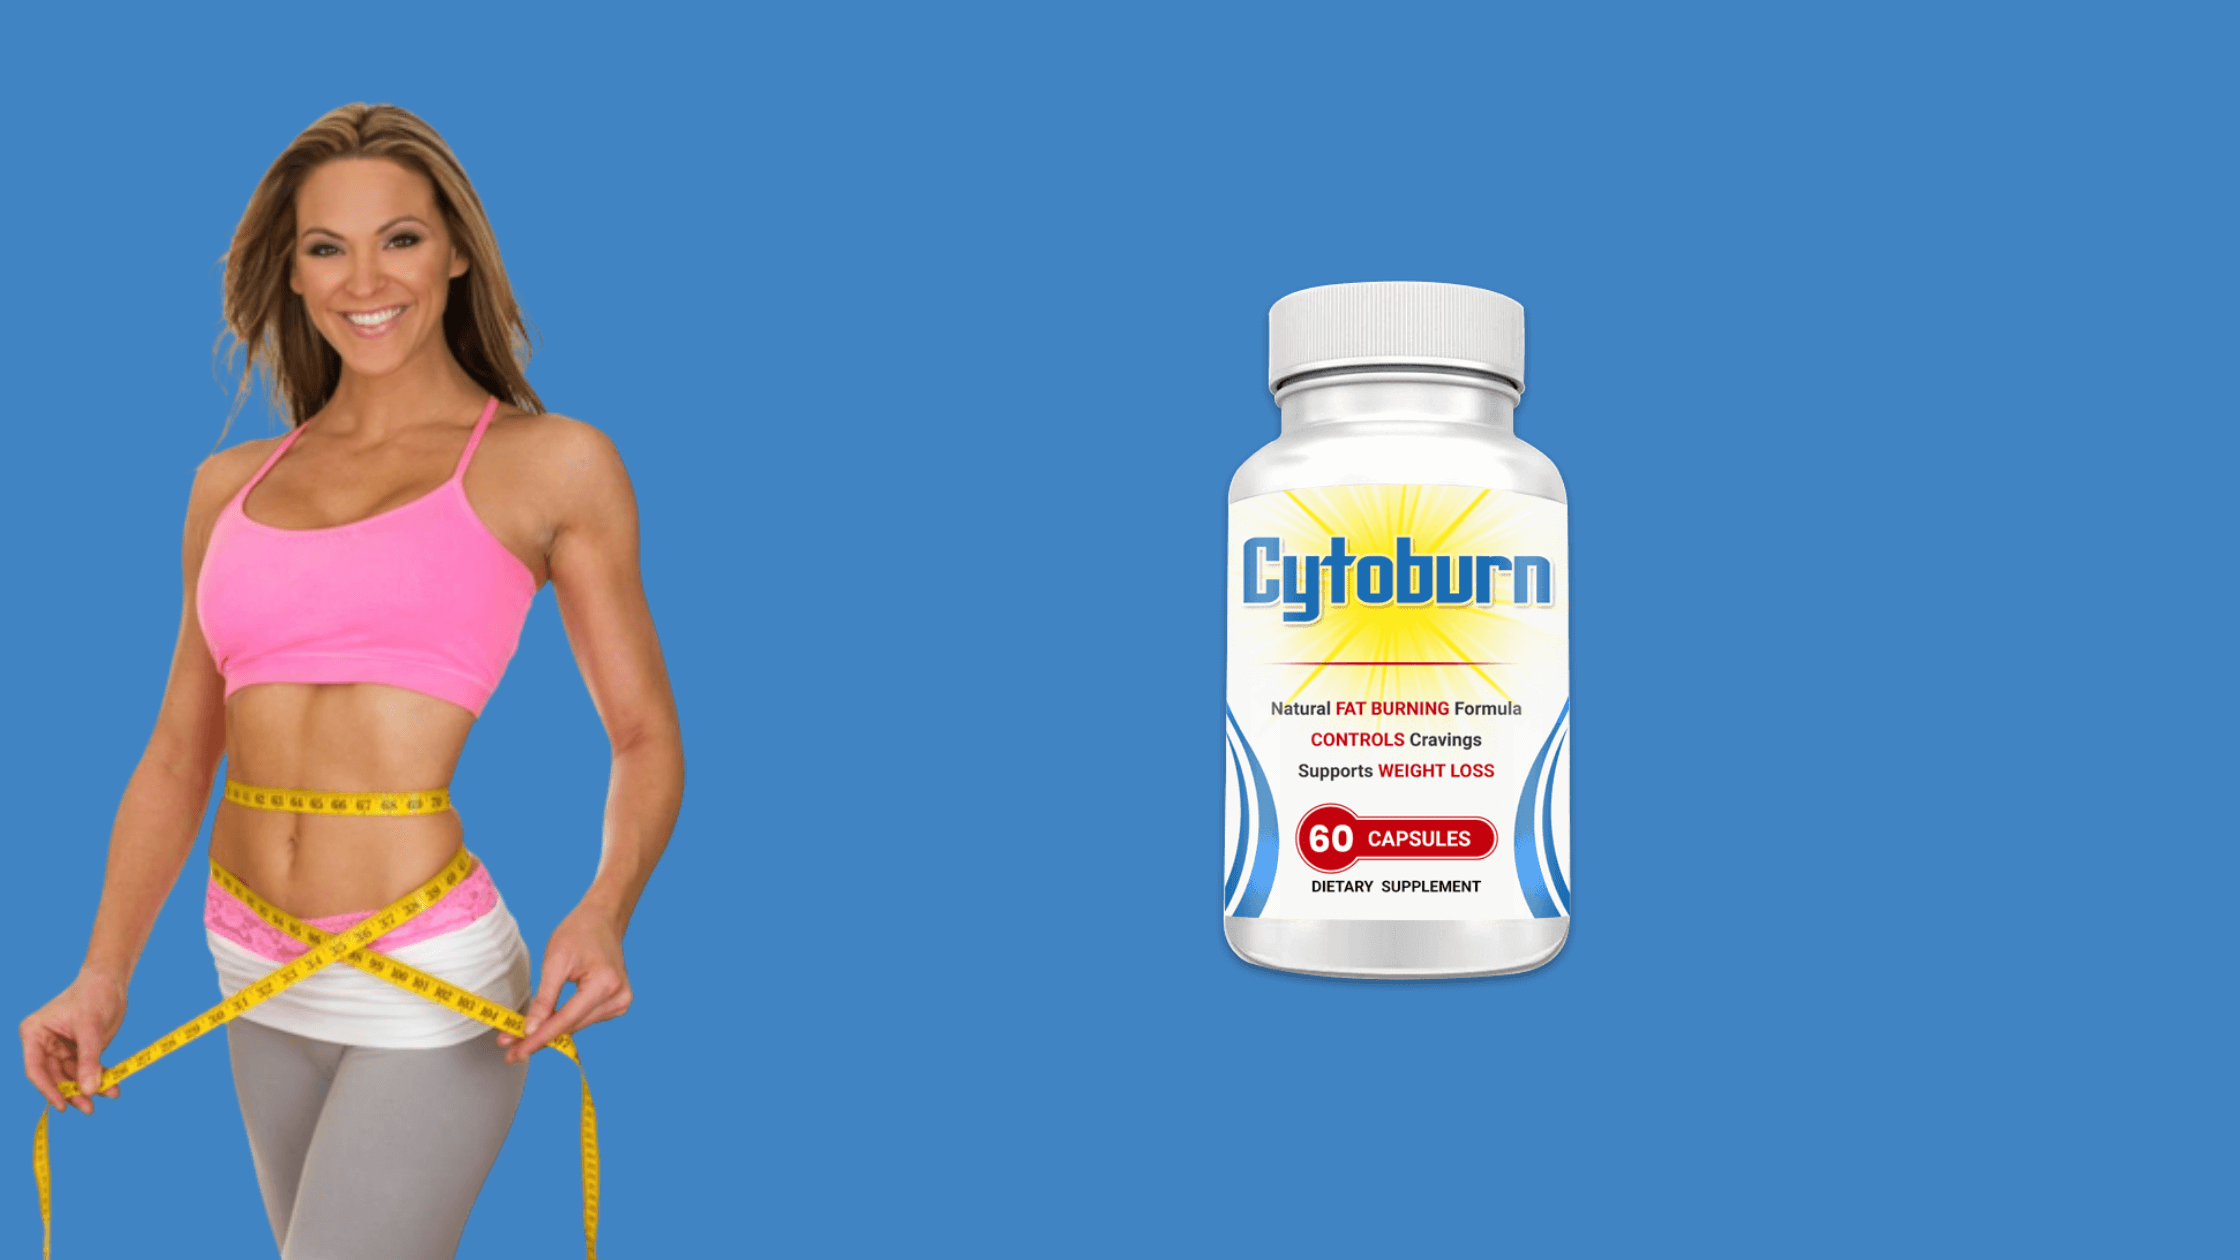 Cytoburn benefits